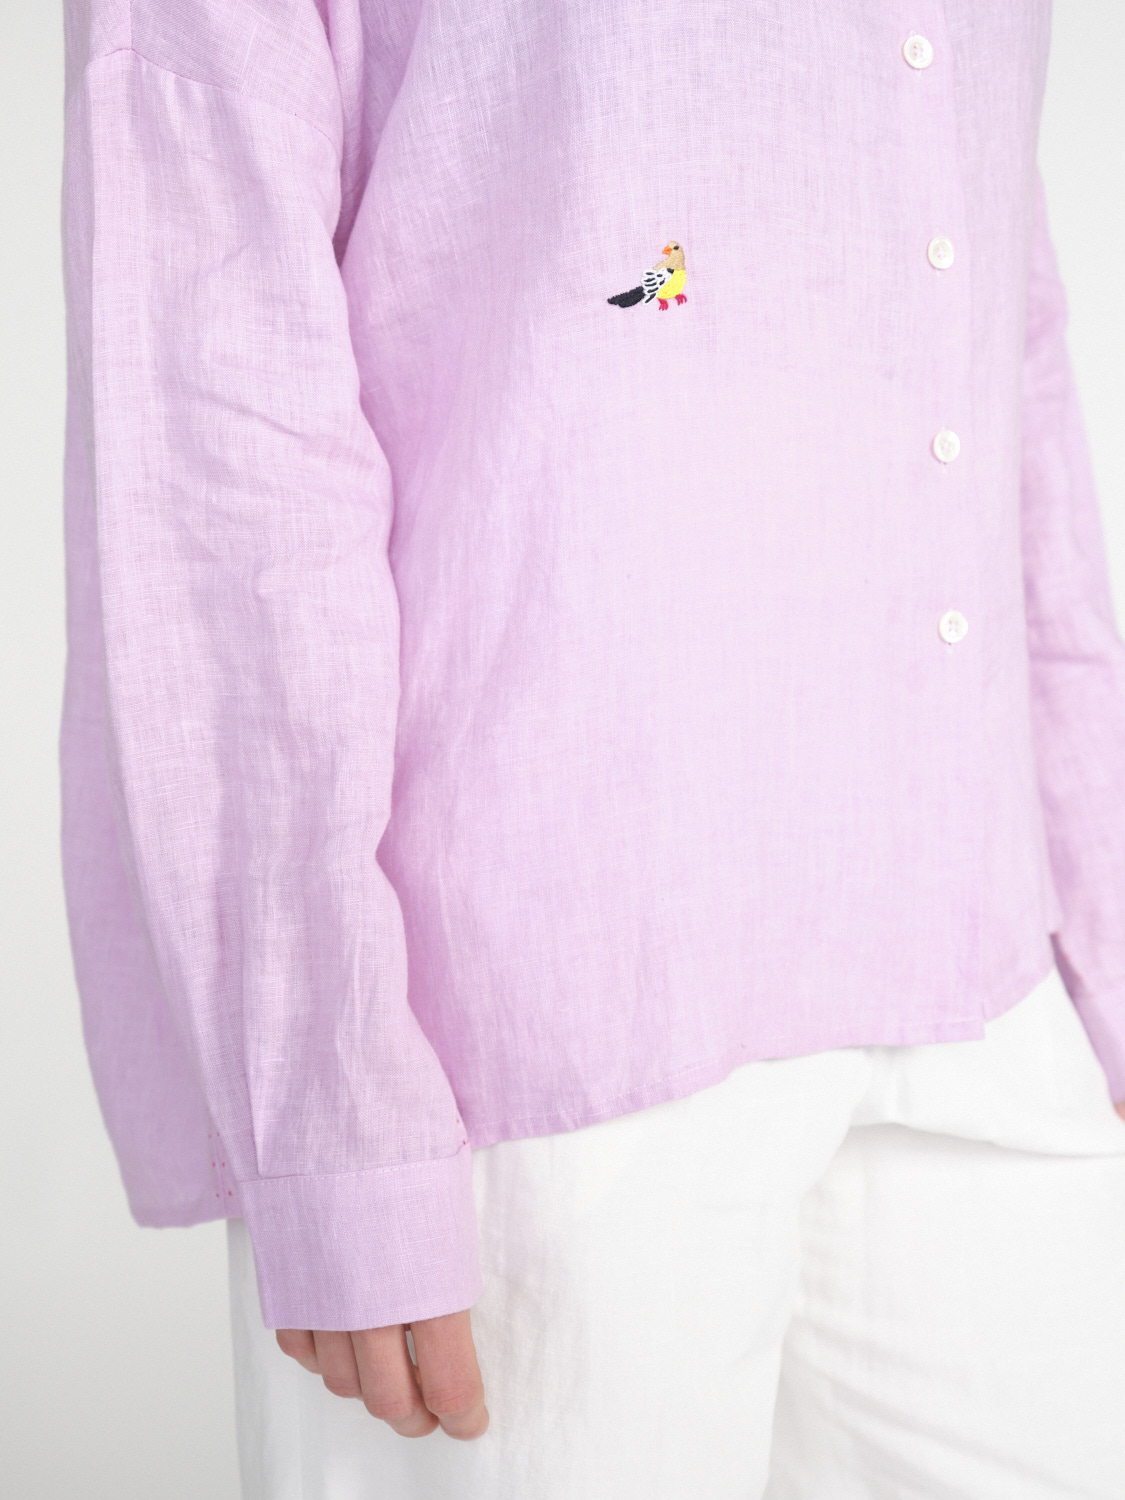 an an londree Summer – Leinen-Bluse mit verspielten Details   rosa XS